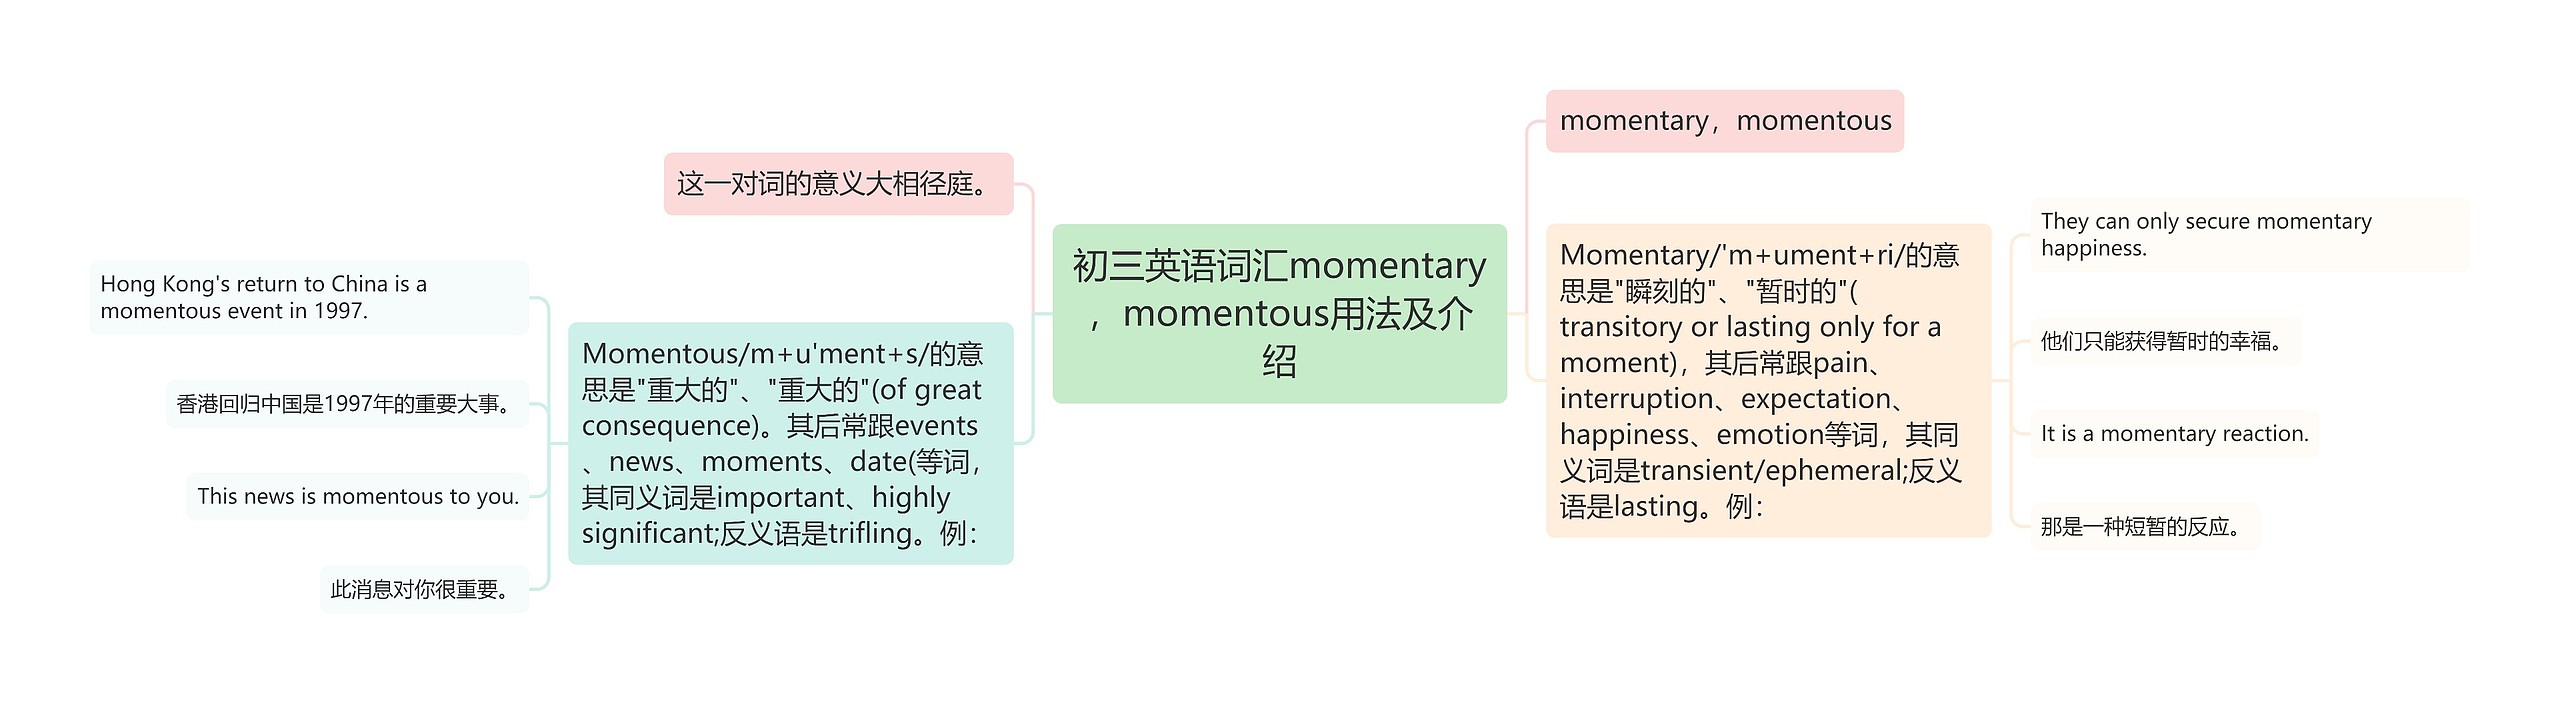 初三英语词汇momentary，momentous用法及介绍